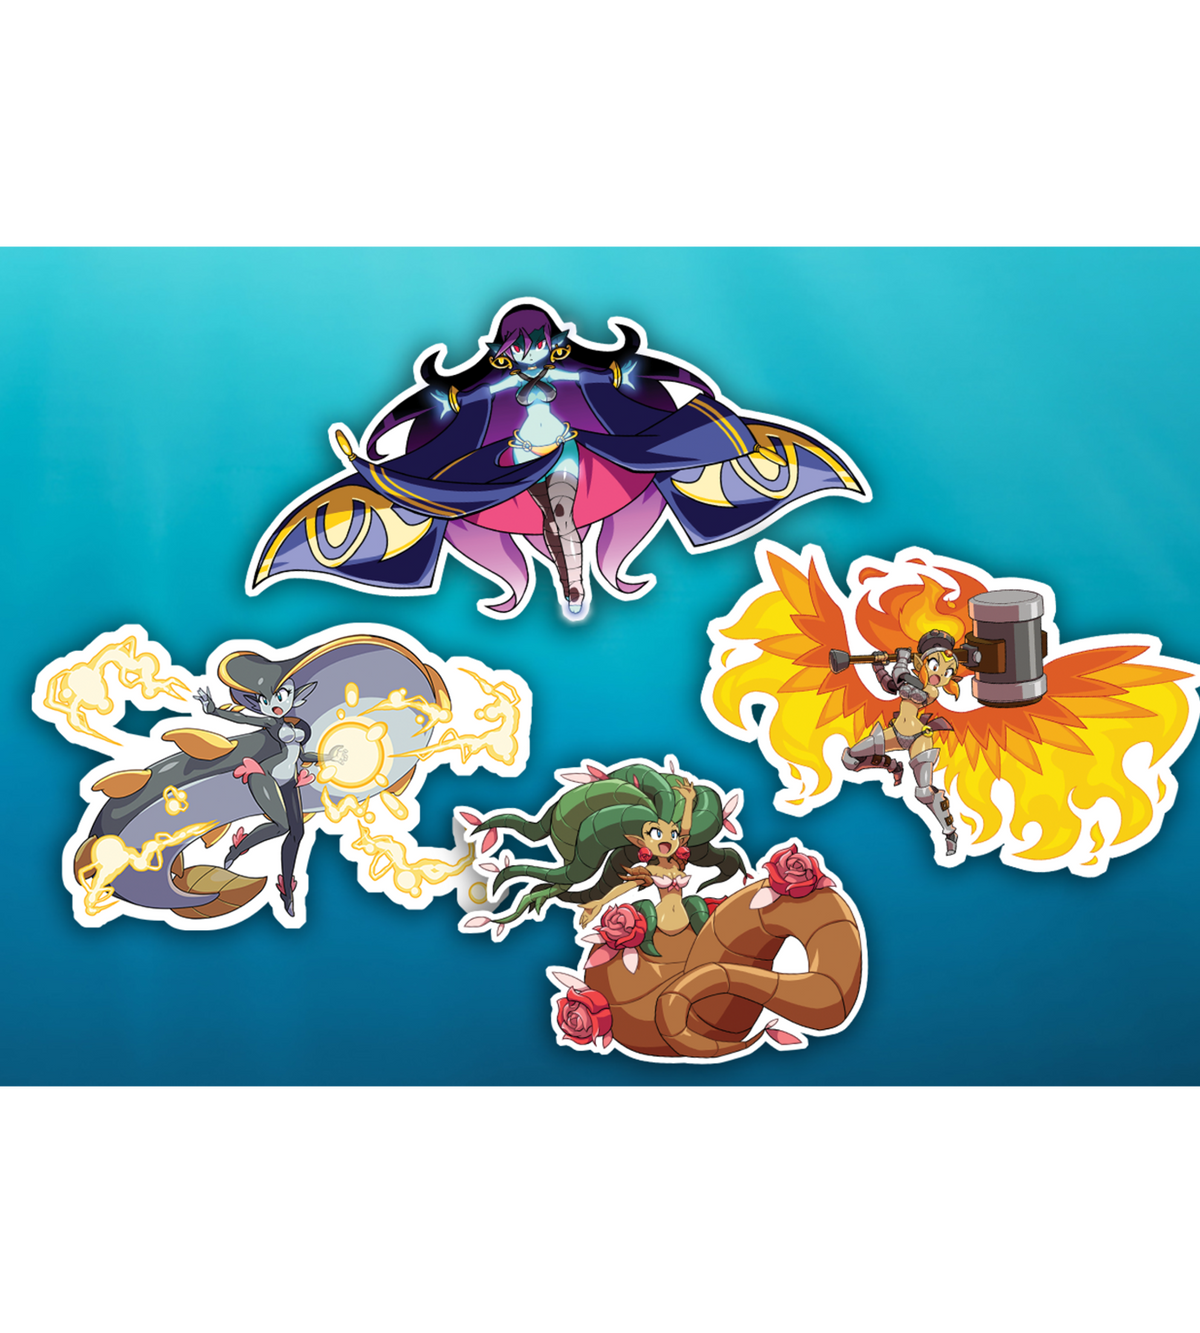 Shantae and the Seven Sirens Fusion Dance Premium Stickers